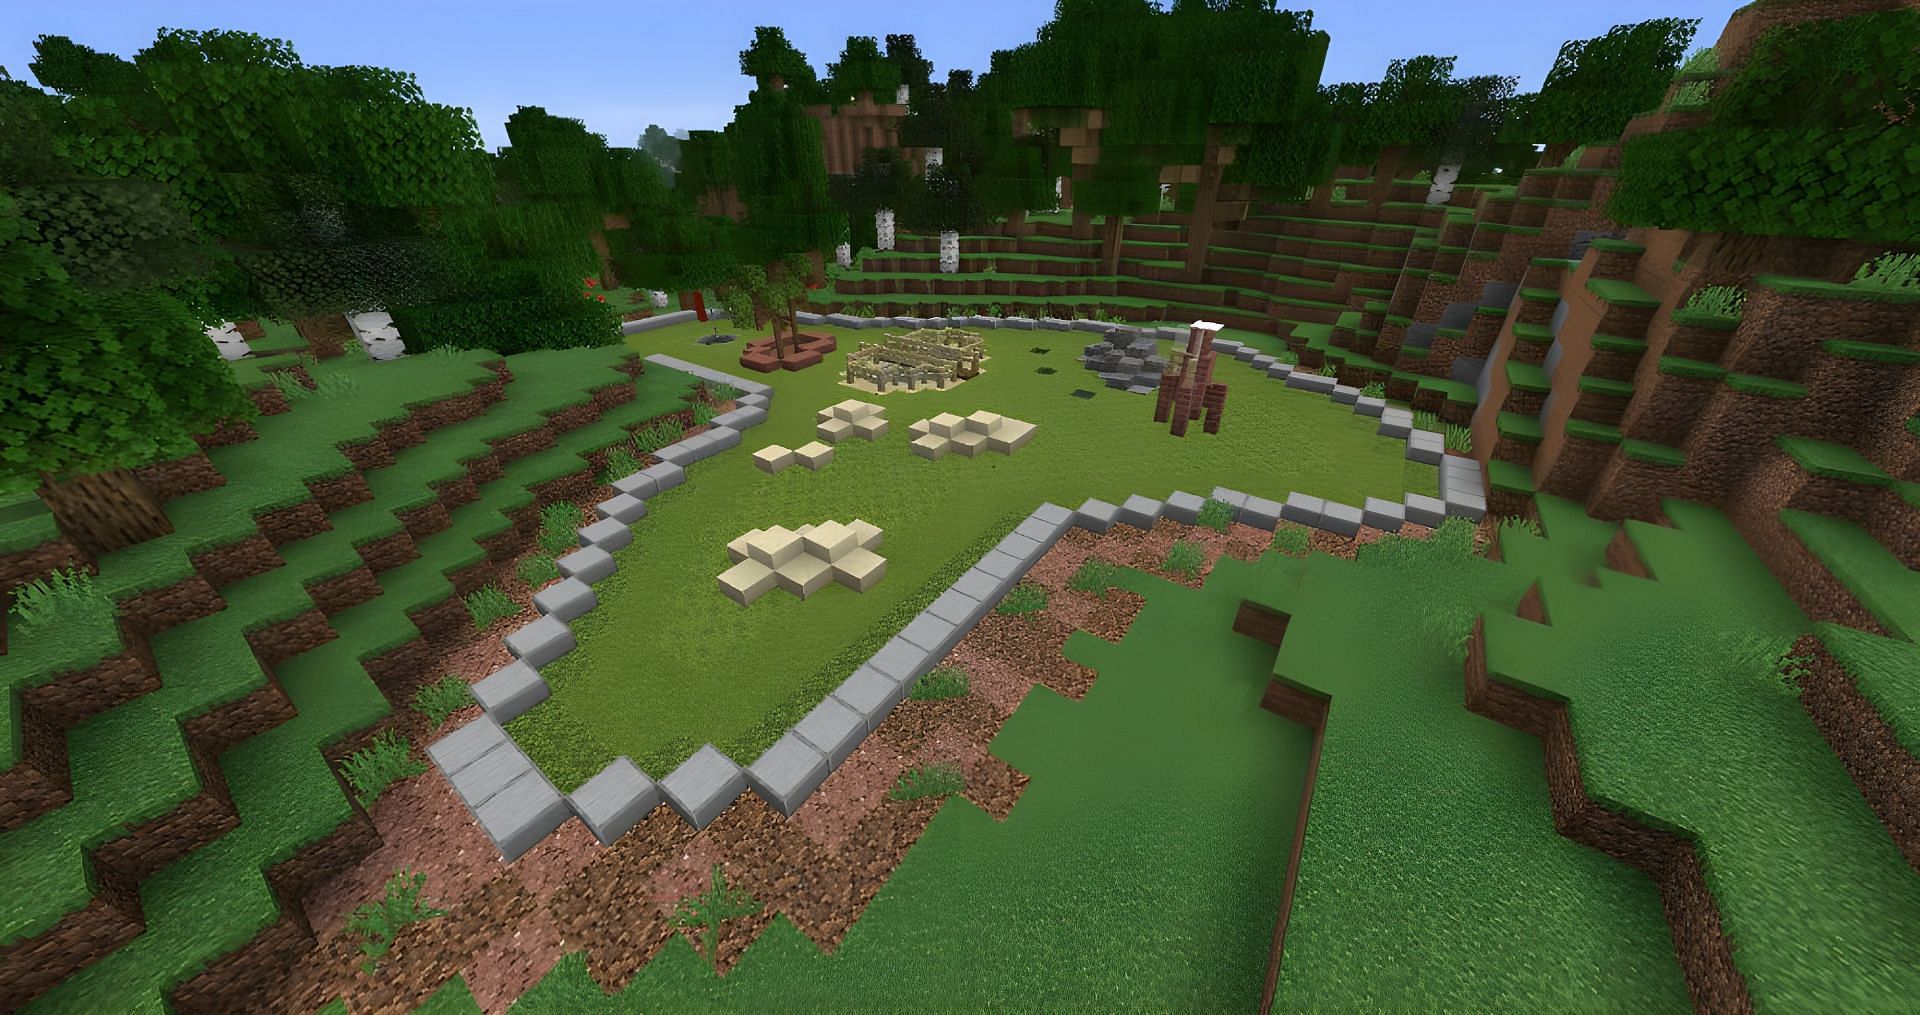 Minecraft golf course builds for your pleasure (Image via Reddit/u/PixelGamer705)